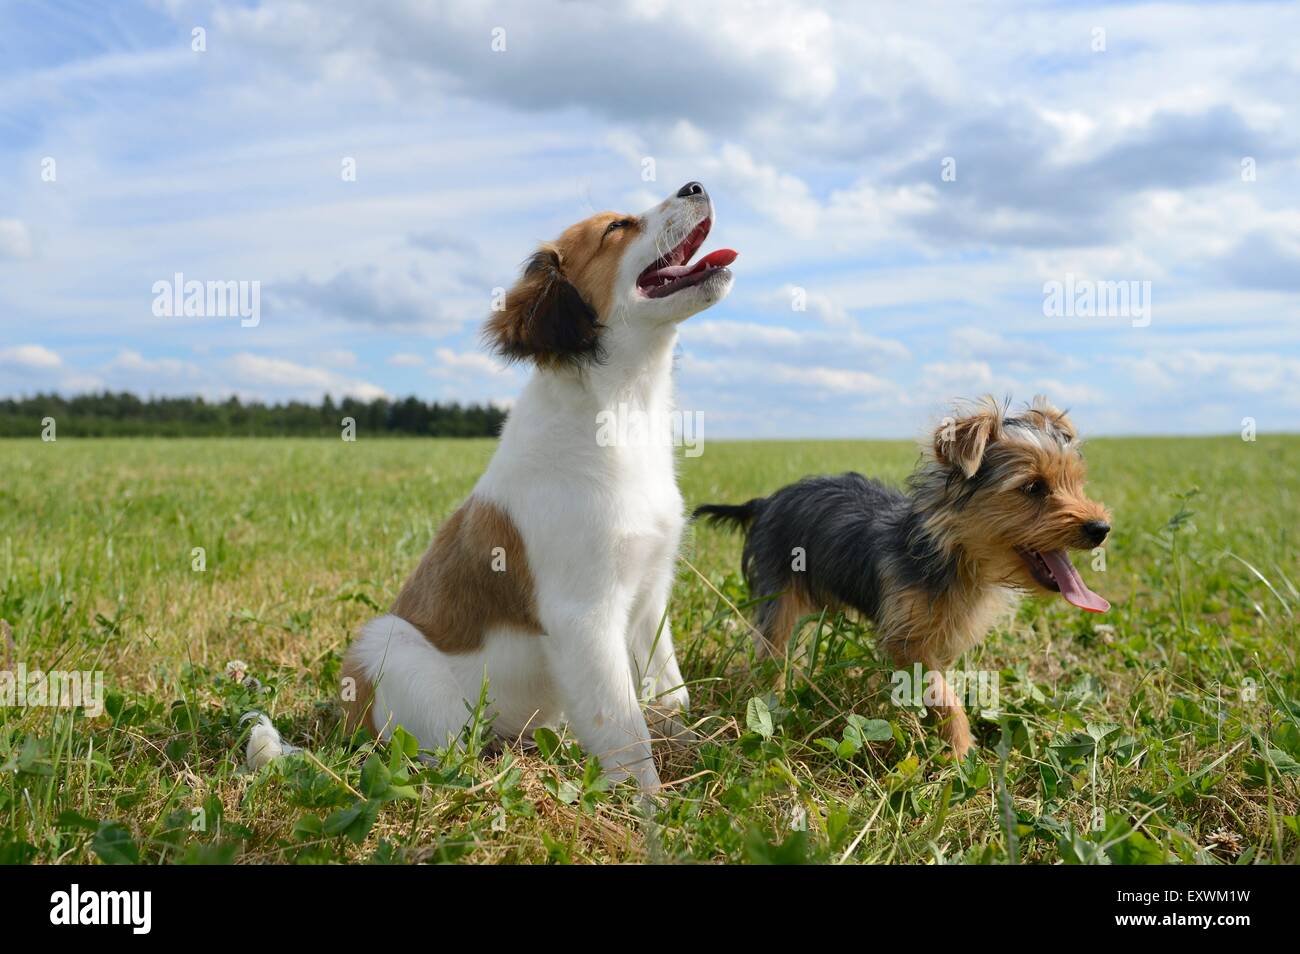 Yorkshire Terrier and Niederlande Kooikerhondje, Upper Palatinate, Germany, Europe Stock Photo